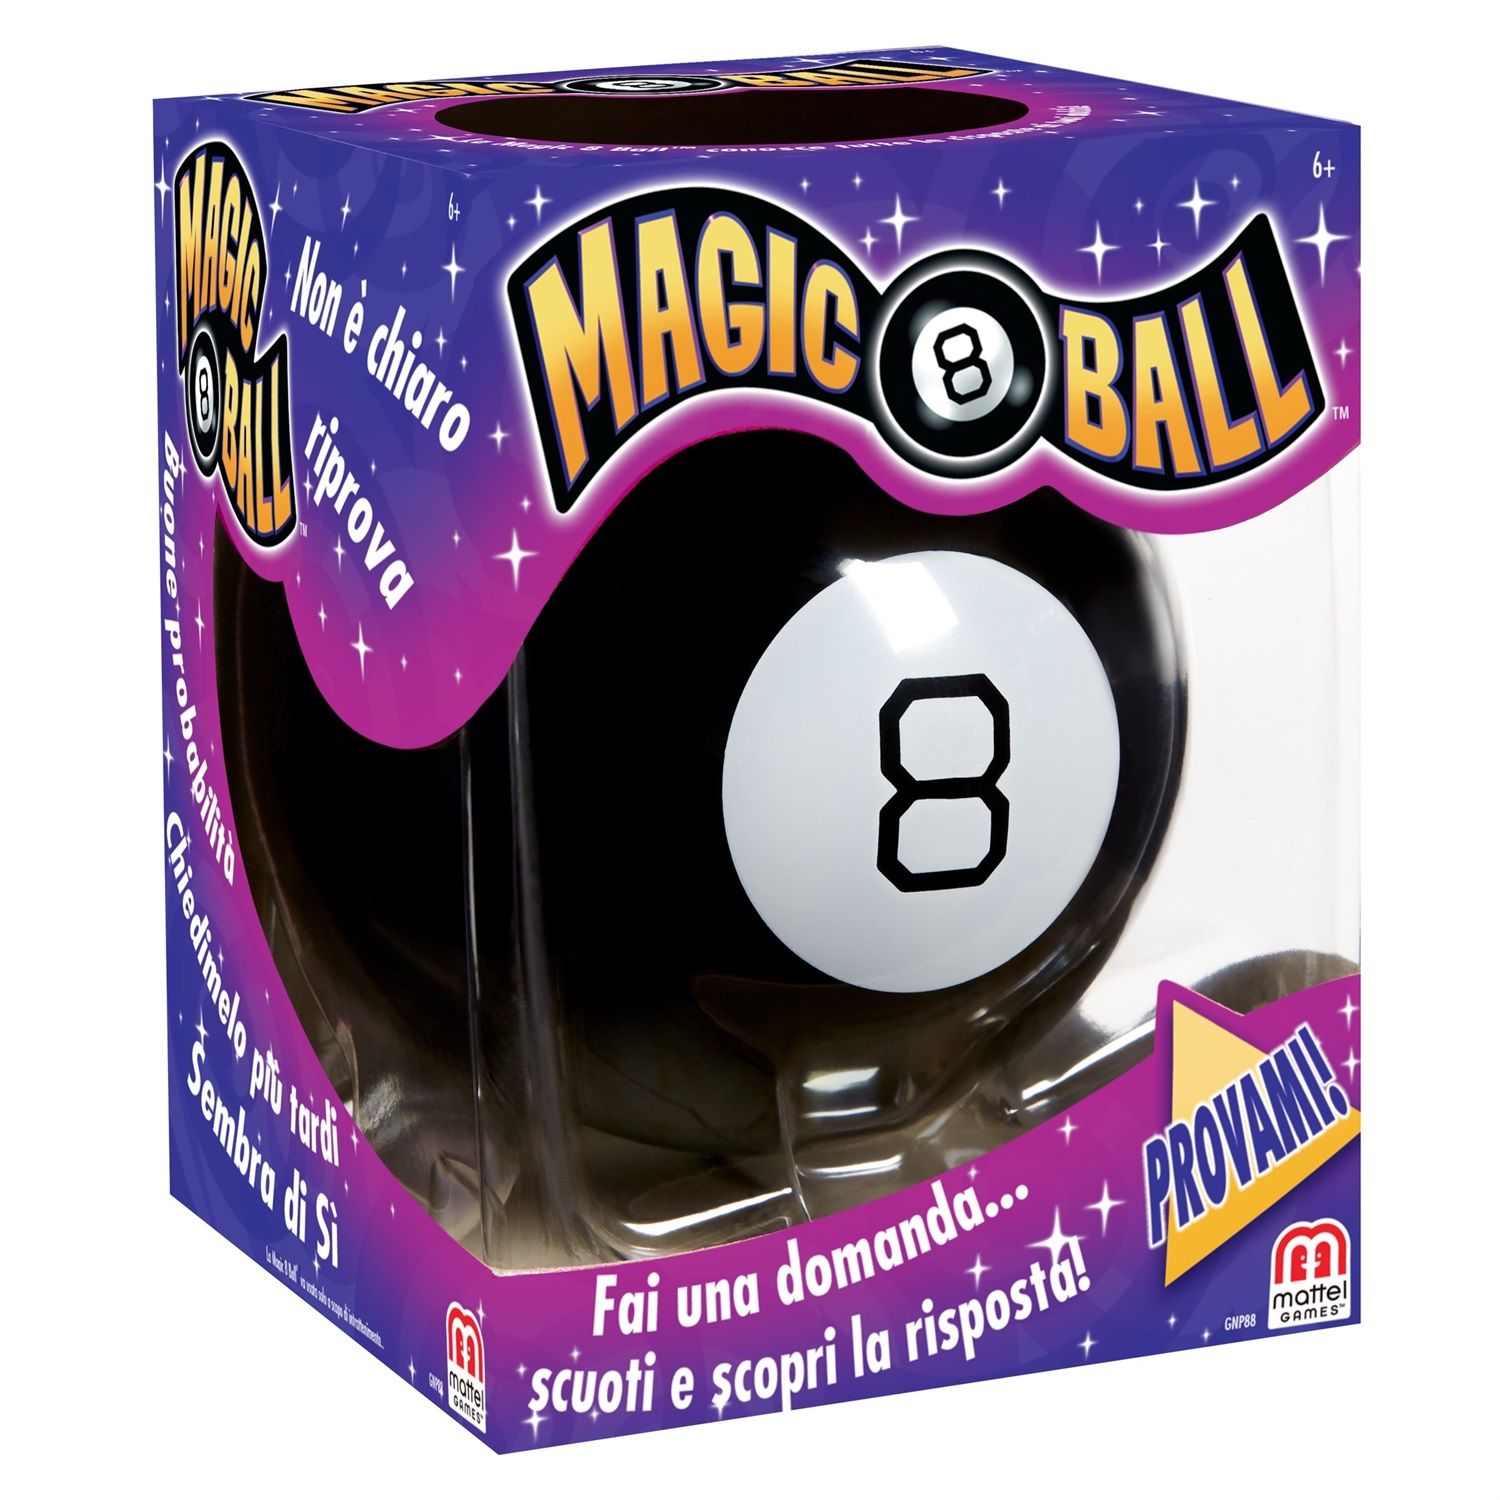 8 Palla Magica Mystic Ball Magic boule magique prevede futuro TV